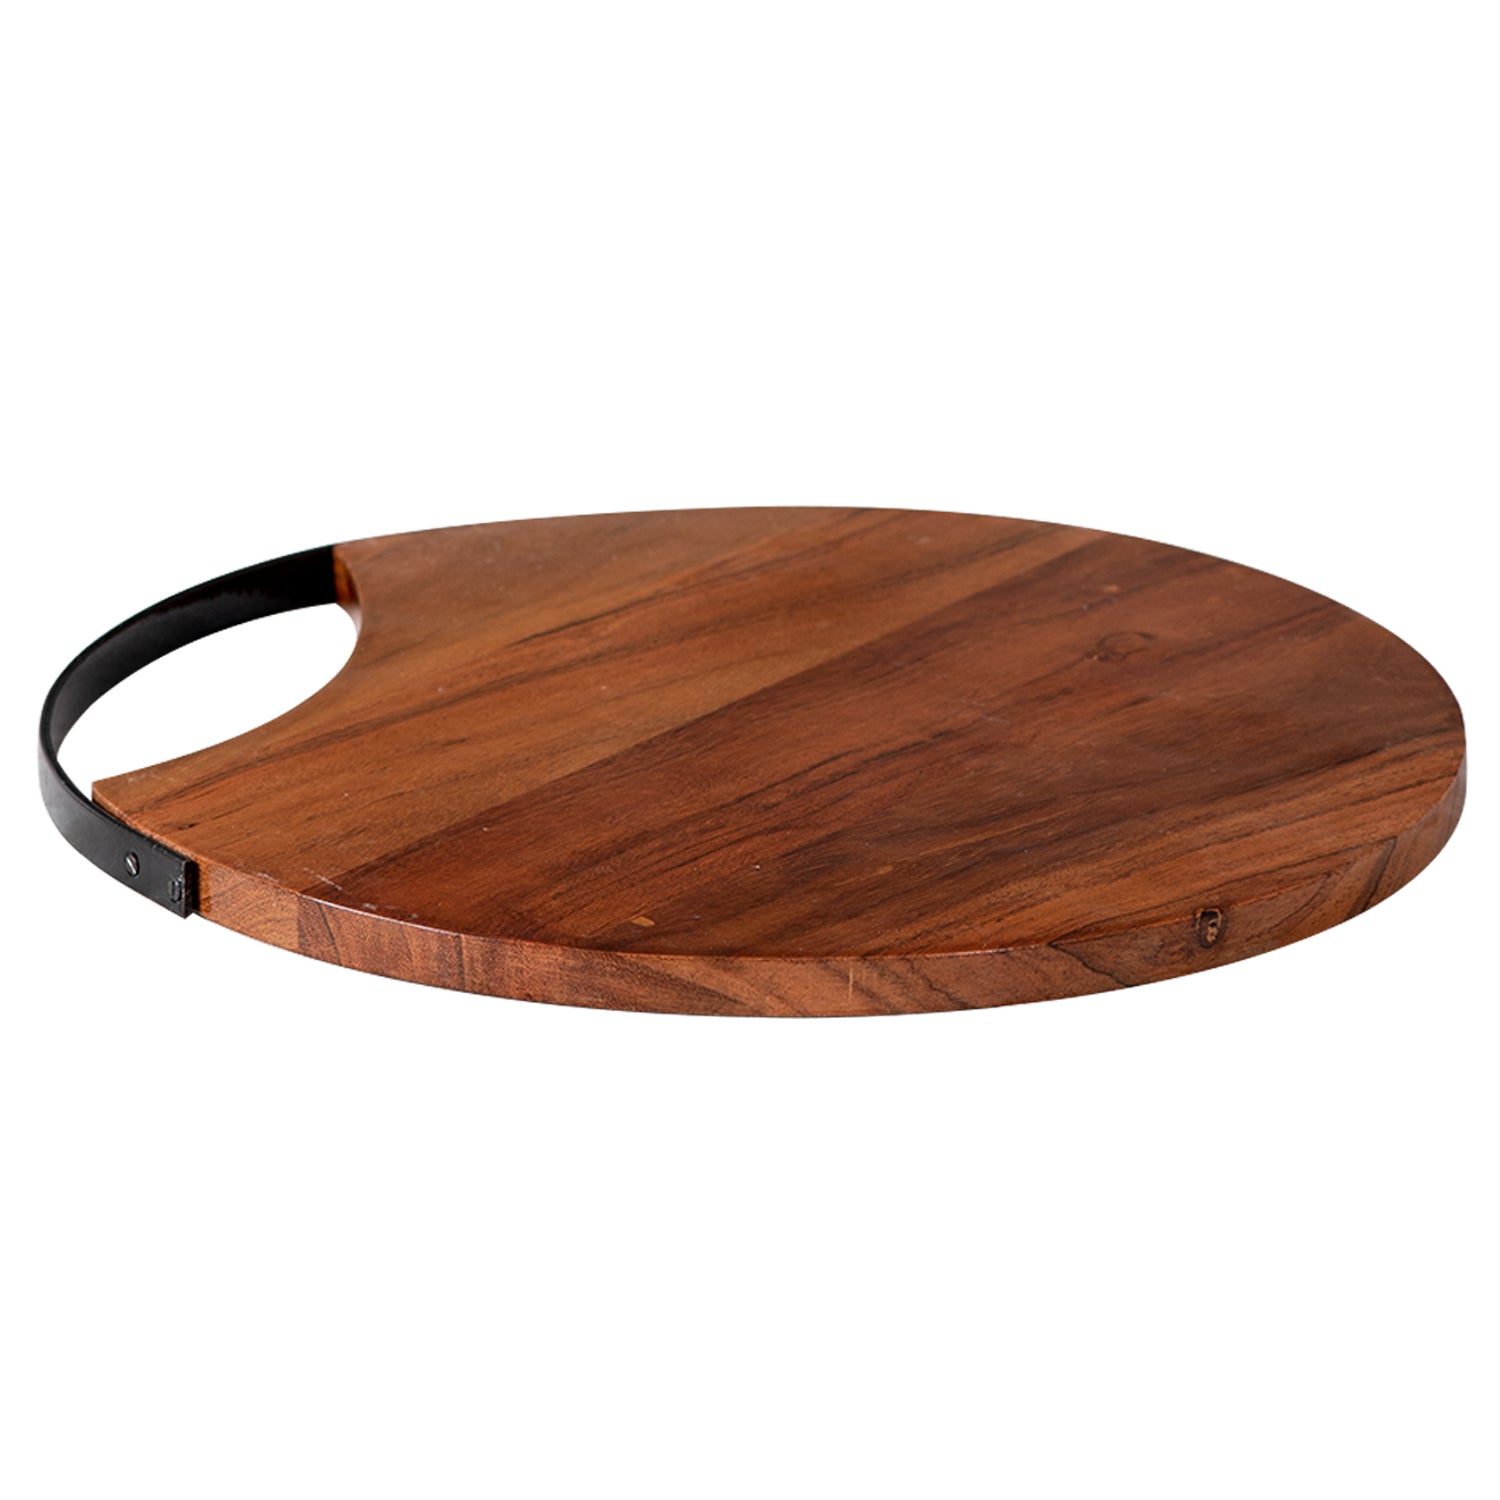 Wooden Serving Platters